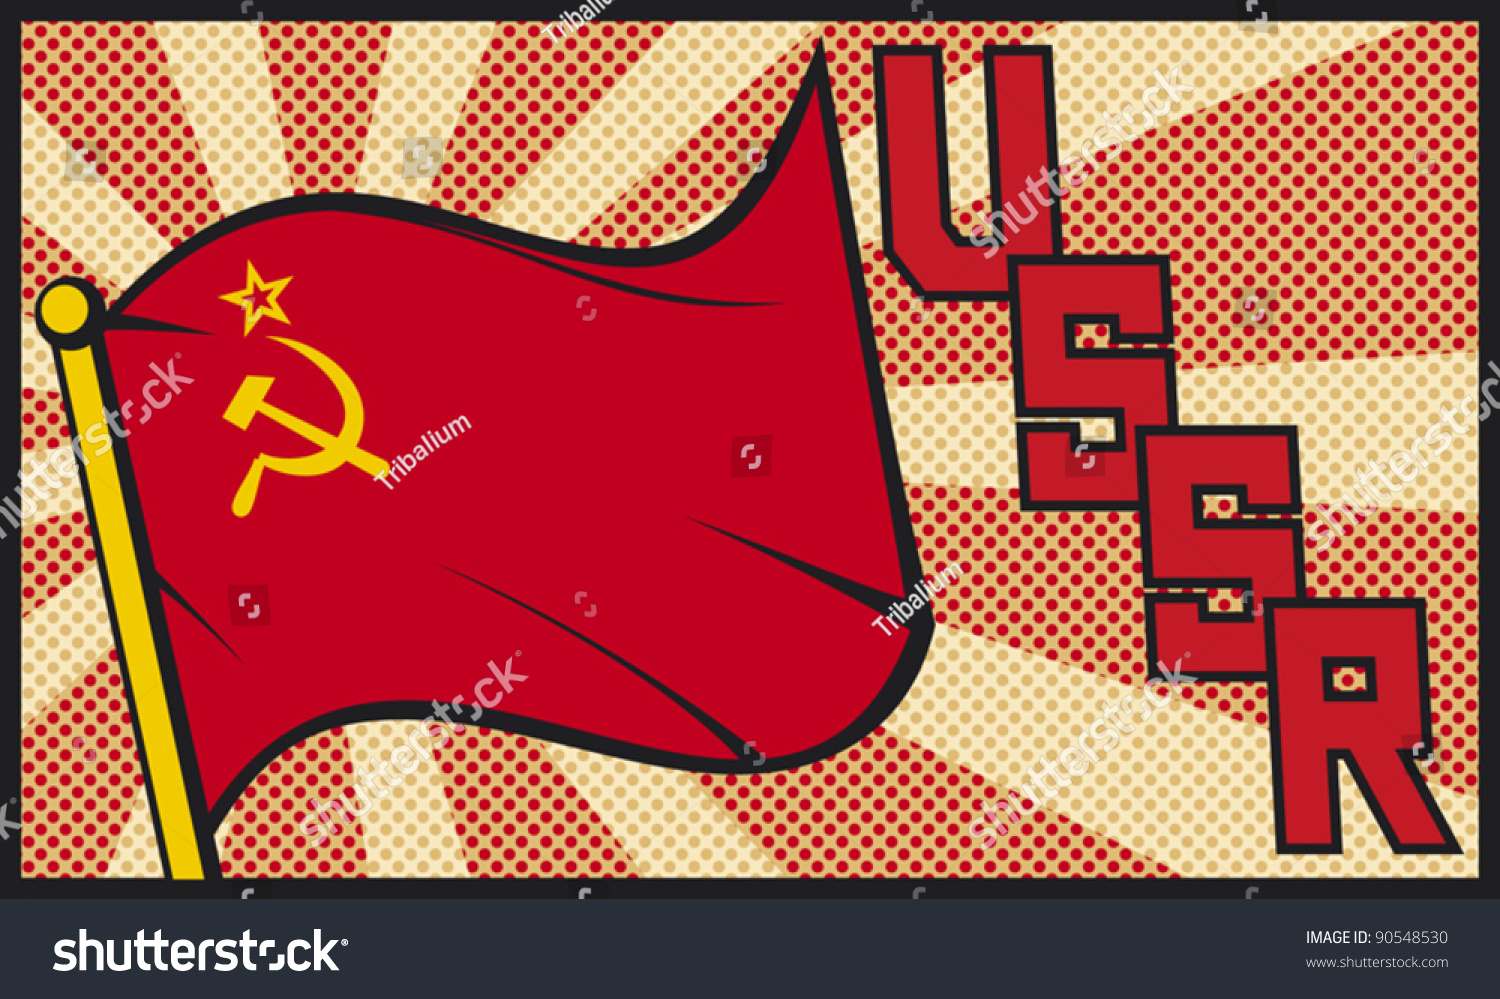 Штандарт в Советском стиле